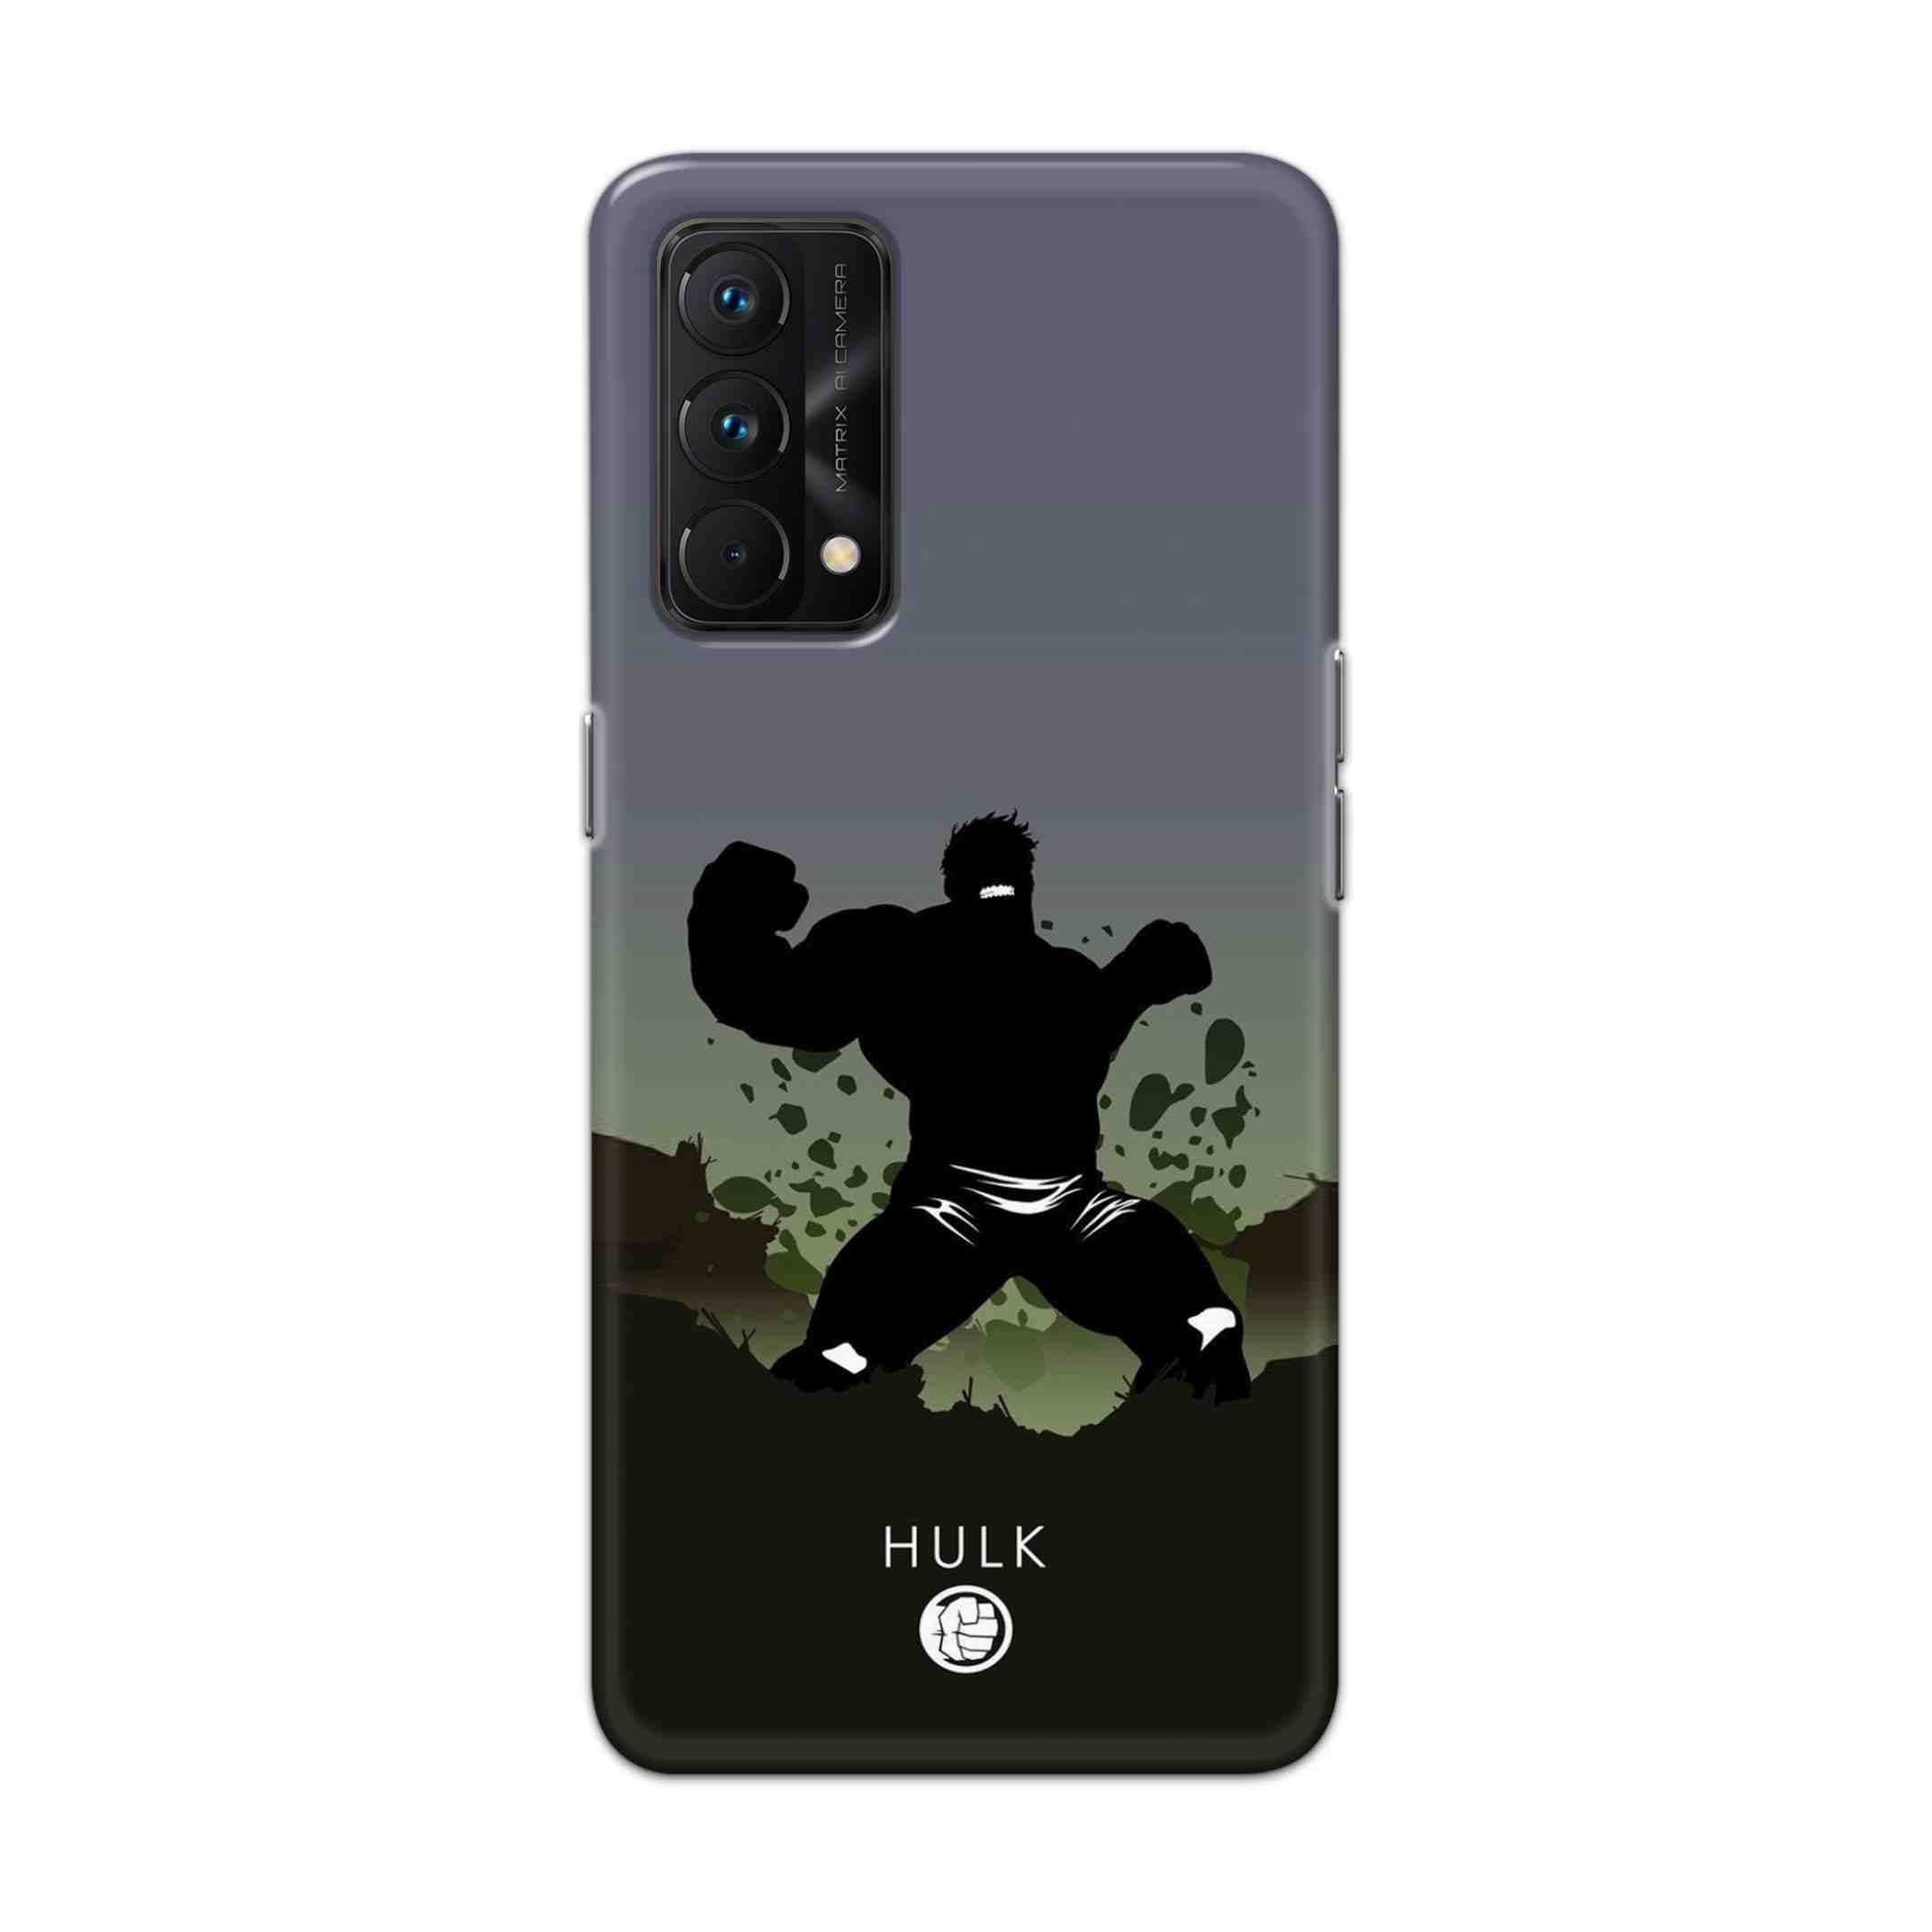 Buy Hulk Drax Hard Back Mobile Phone Case Cover For Realme GT Master Online